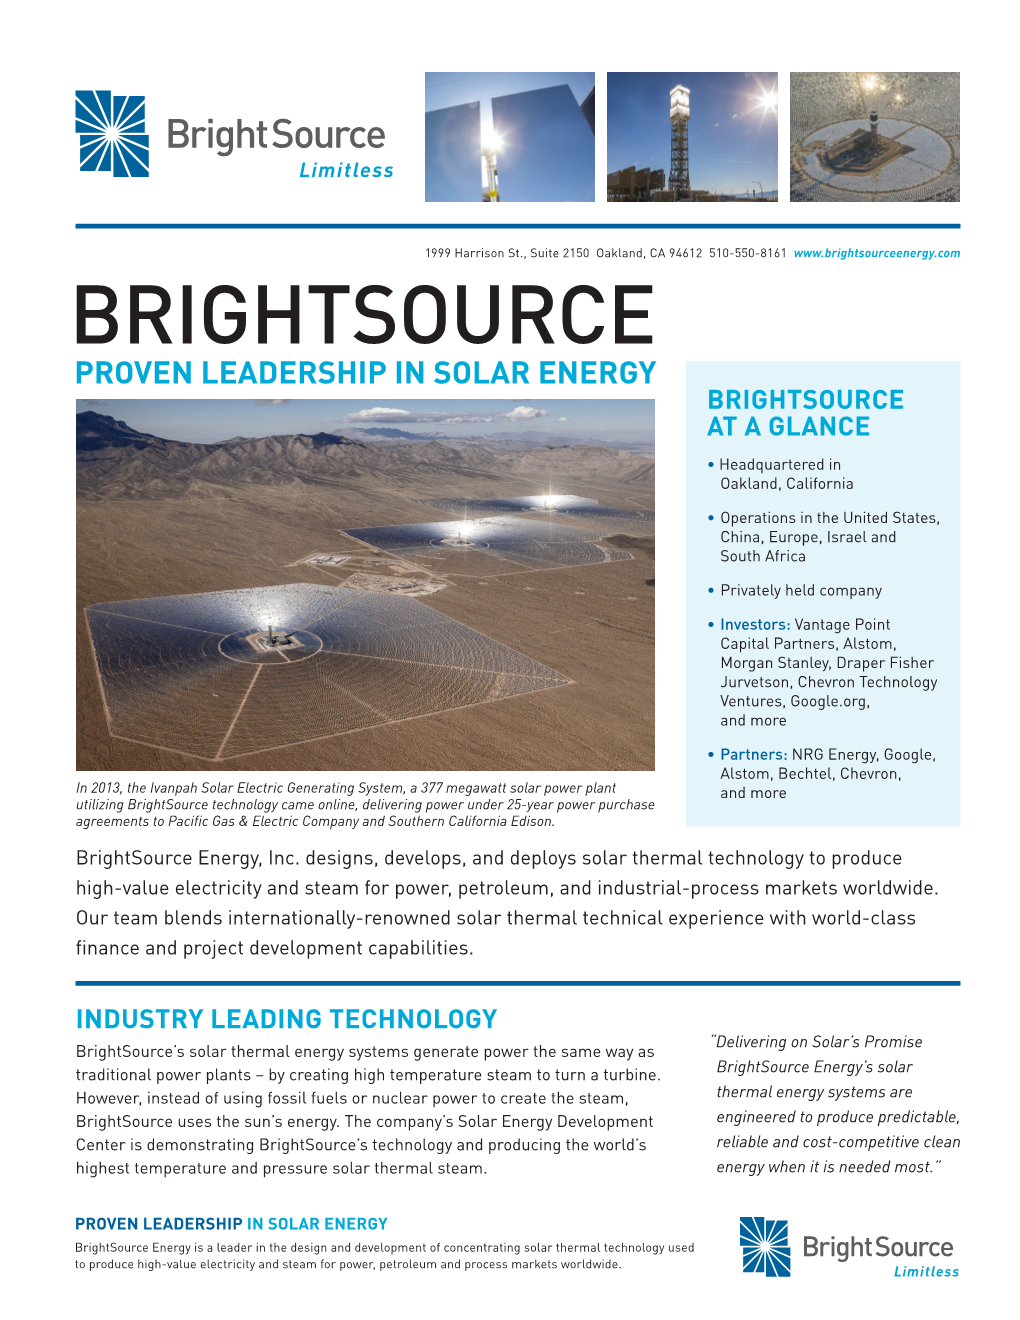 Brightsource Energy, Inc